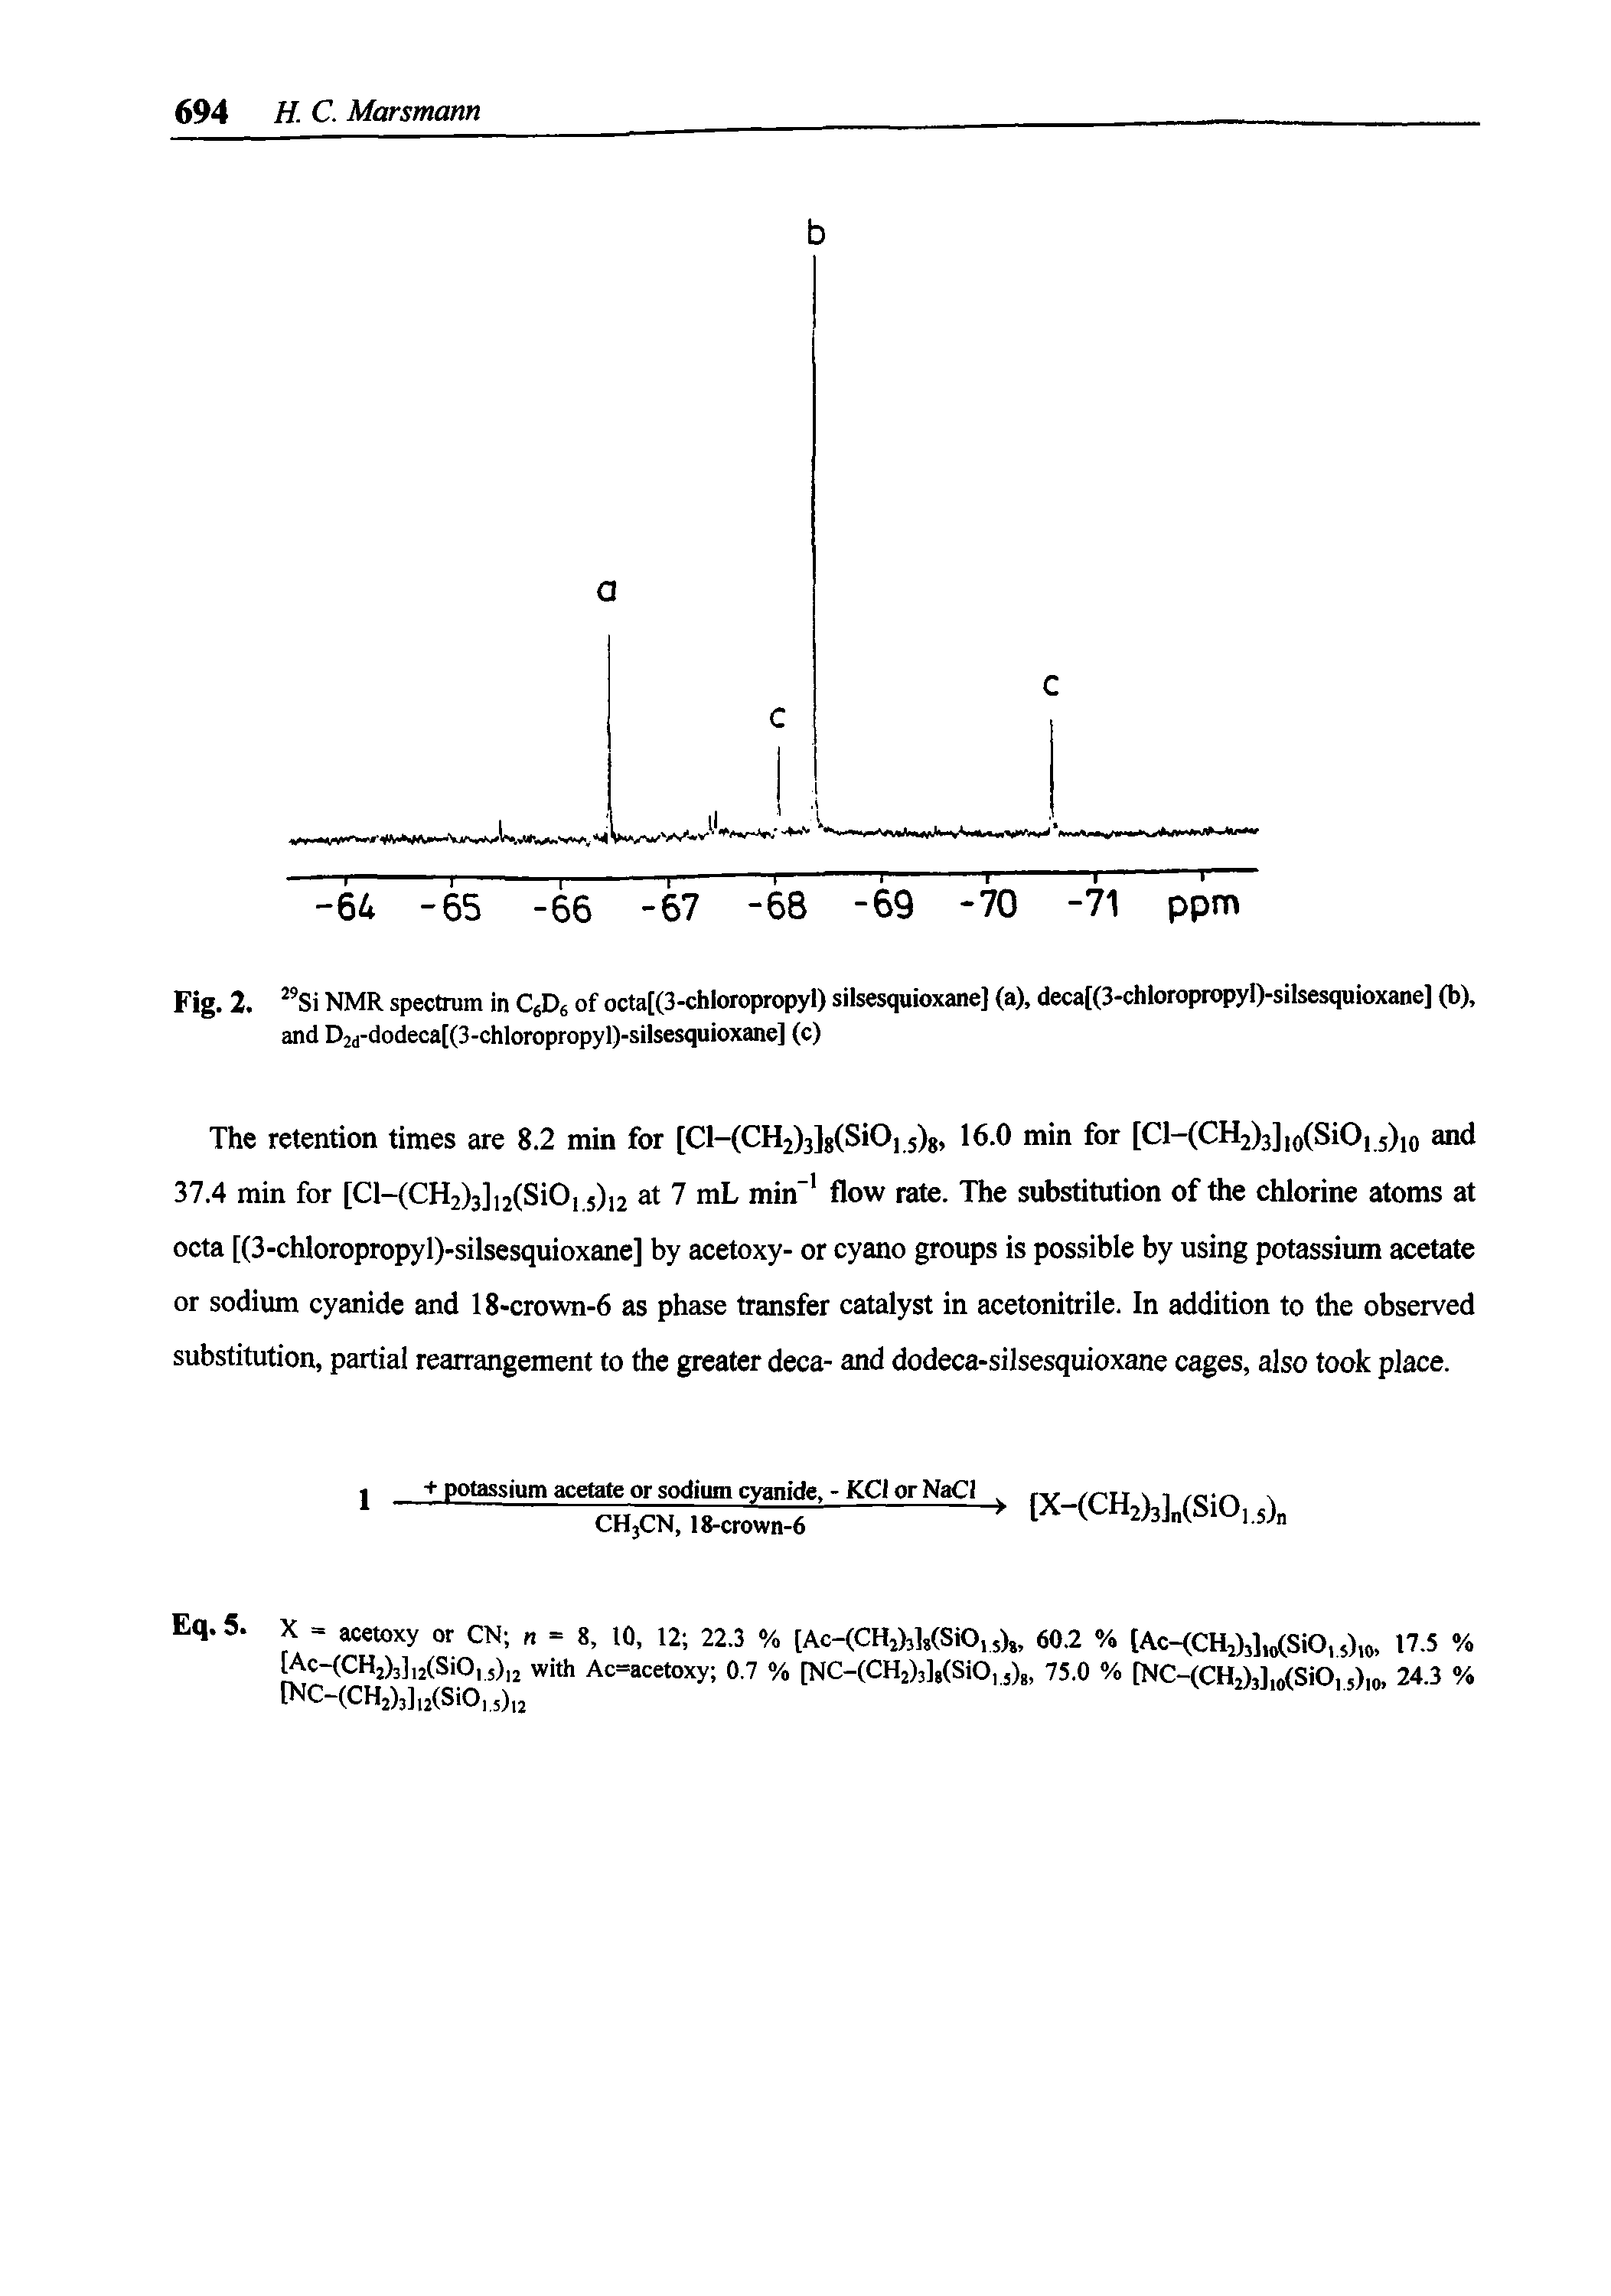 Fig. 2. NMR spectrum in CsDs of octa[(3-chloropropyl) silsesquioxane] (a), deca[(3-chloropropyI)-silsesquioxane] (b), and D2d-dodeca[(3-chloropropyl)-silsesquioxane] (c)...